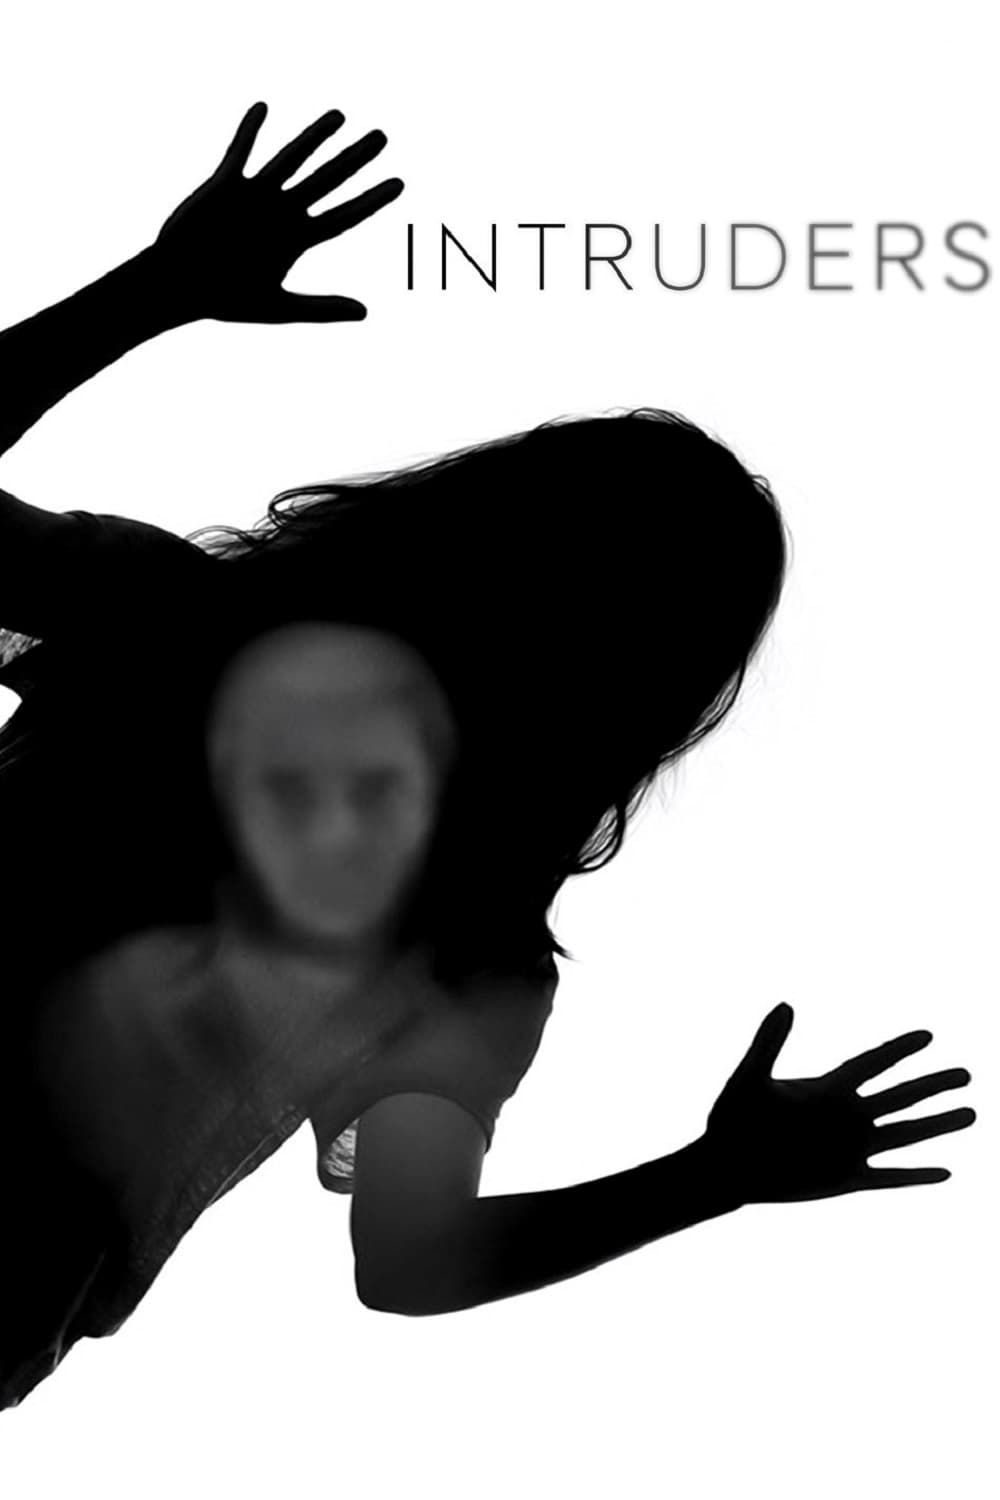 Intruders rating